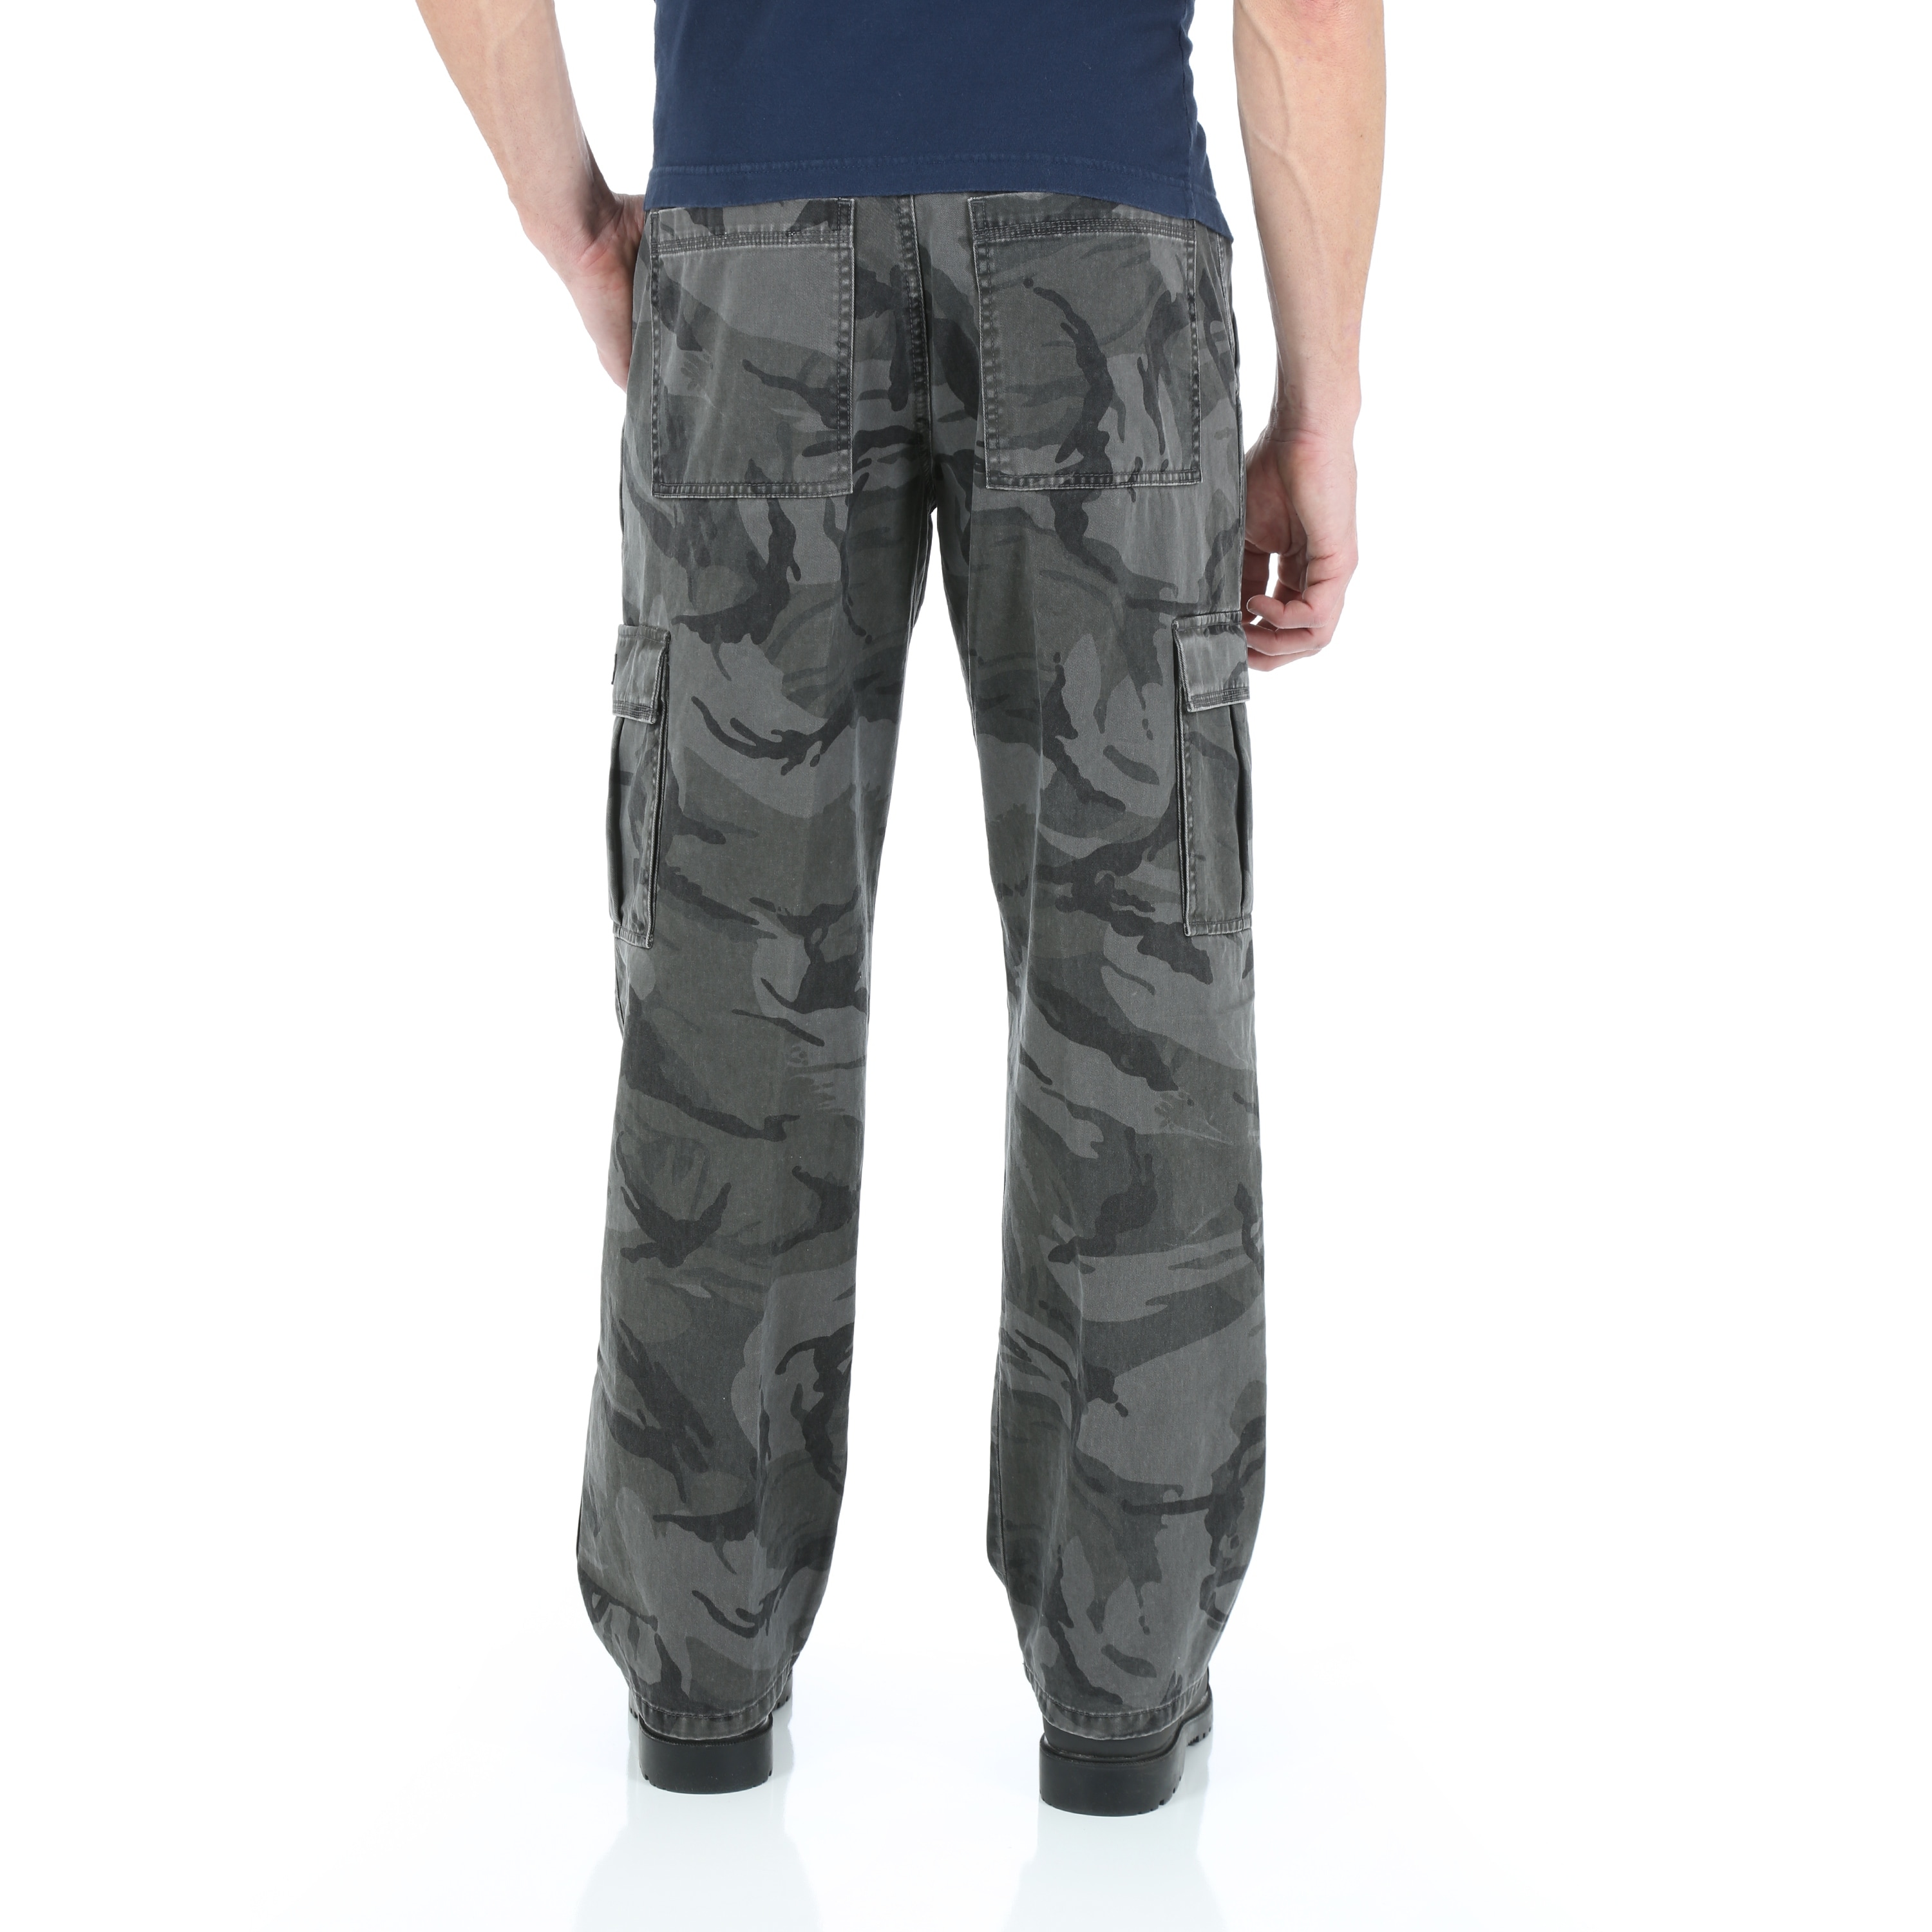 gray wrangler pants